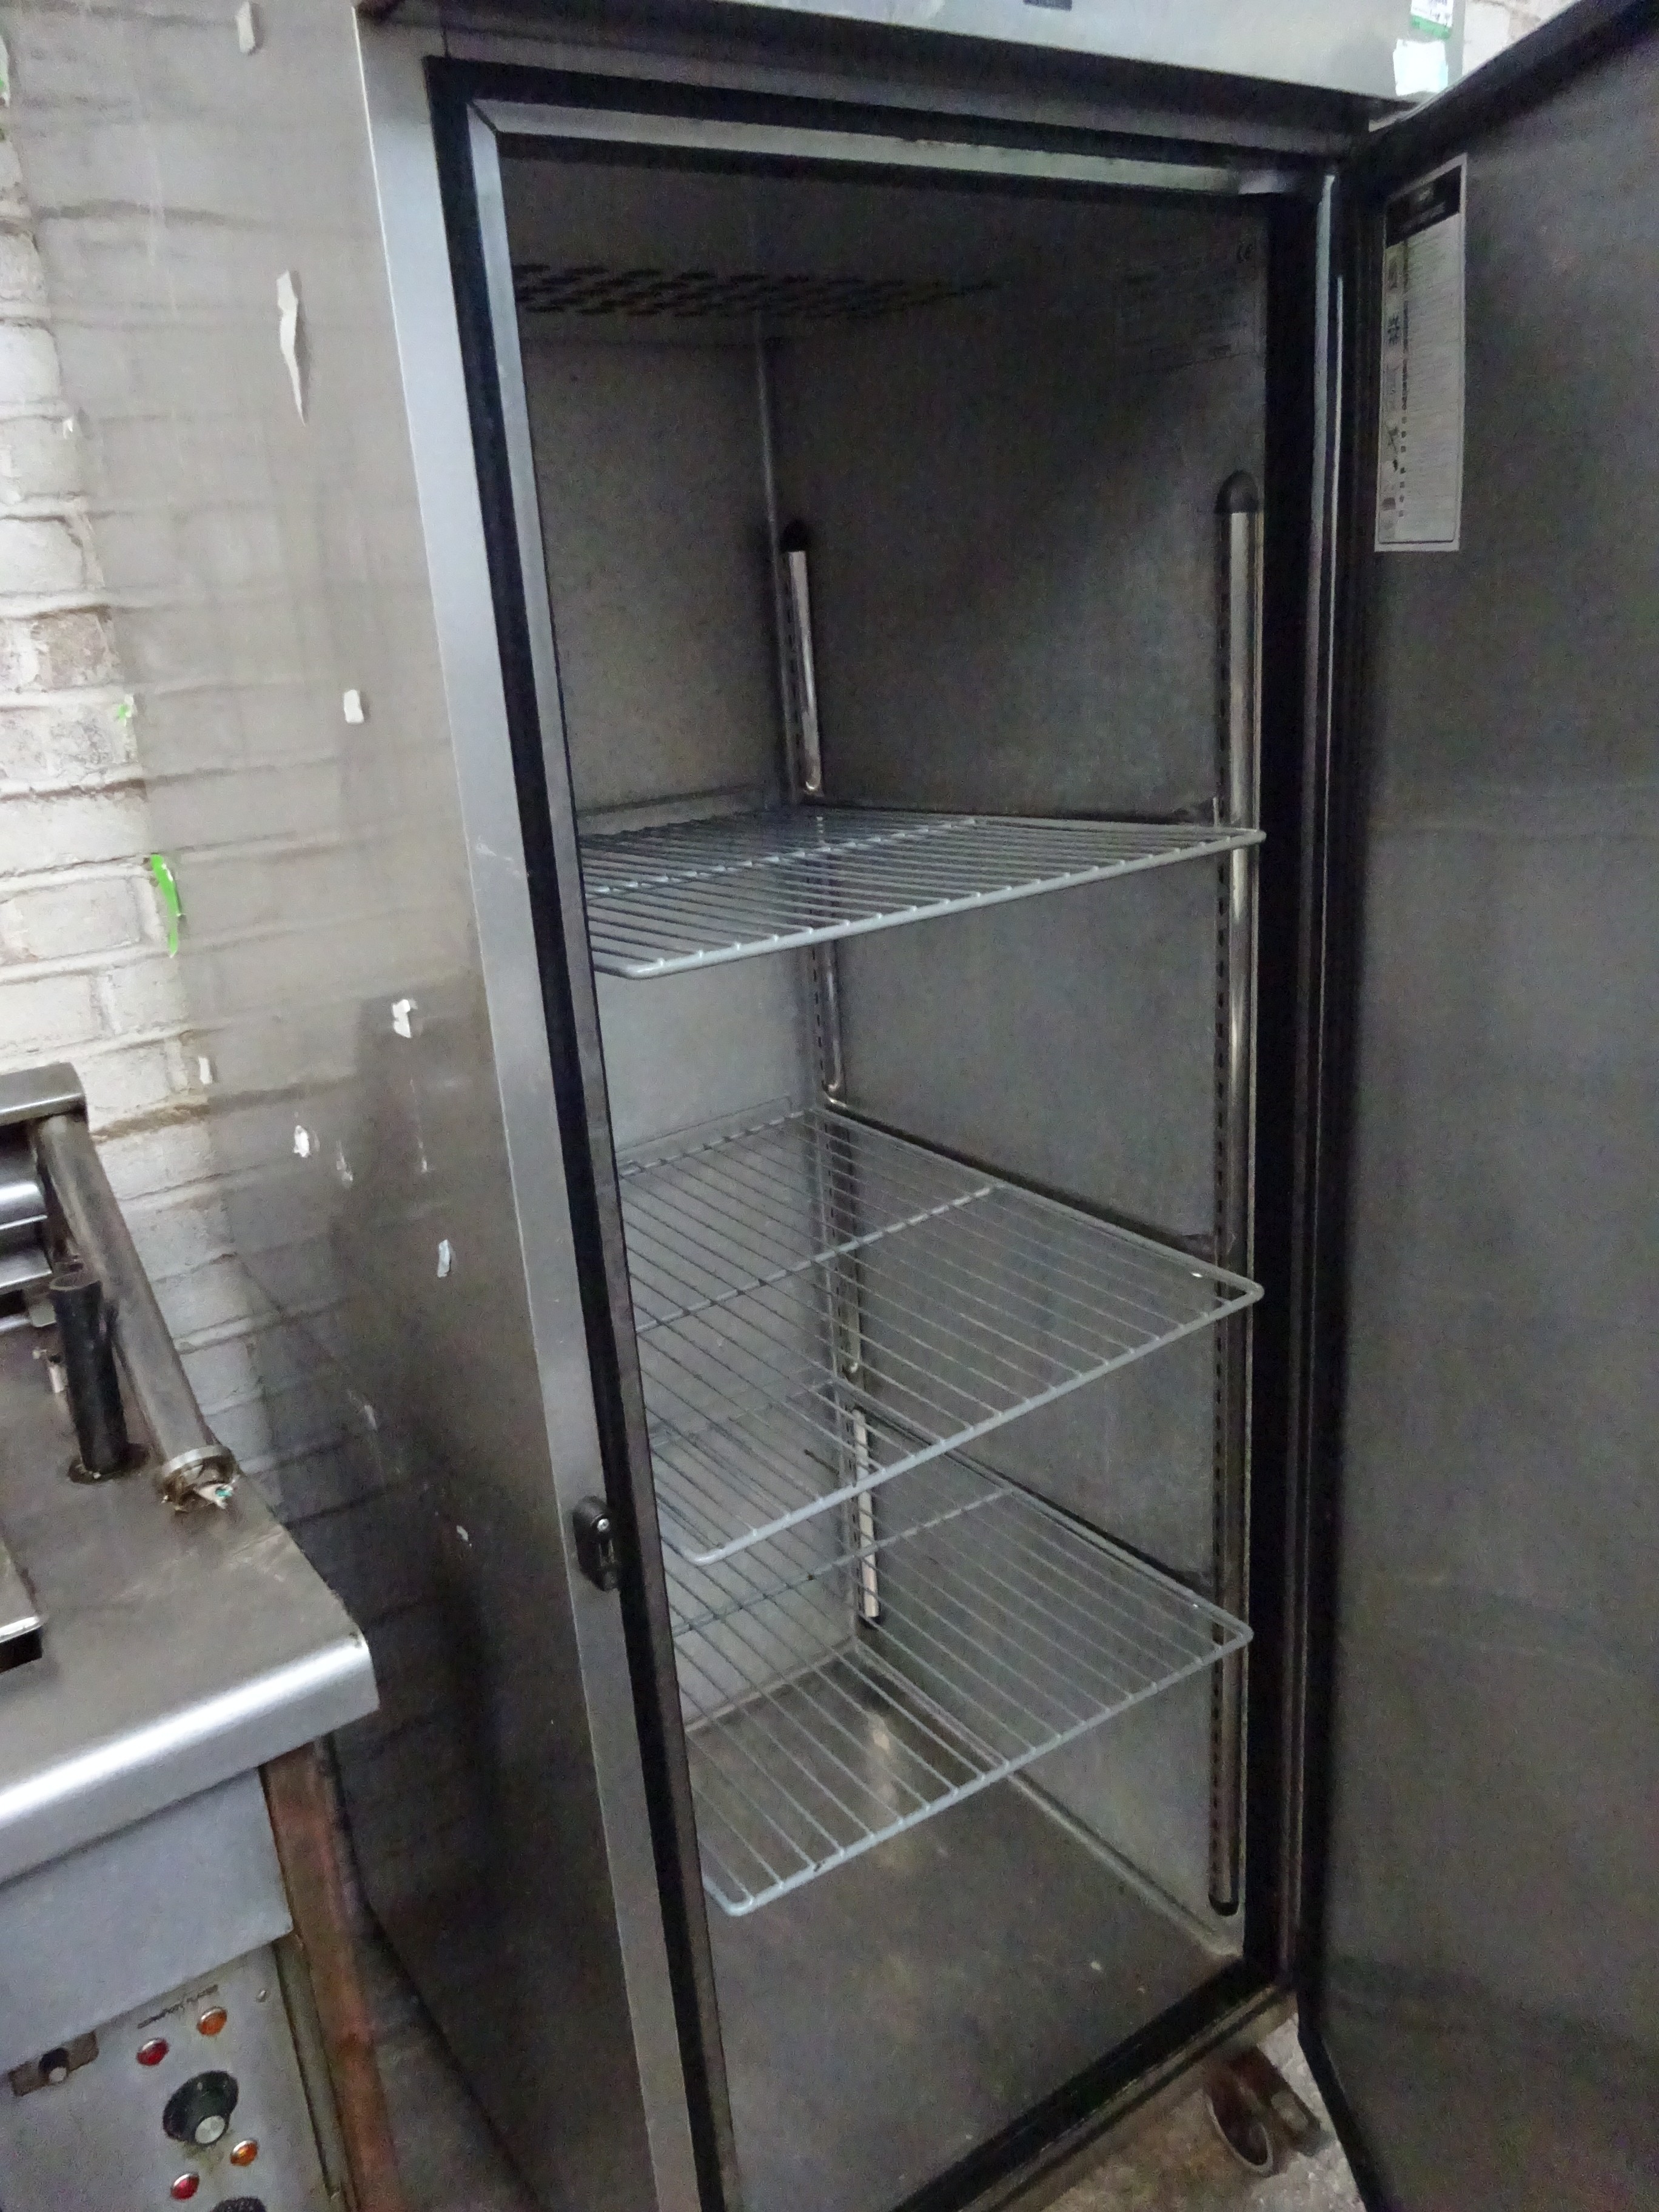 Fosters stainless steel single door upright fridge. - Image 2 of 4